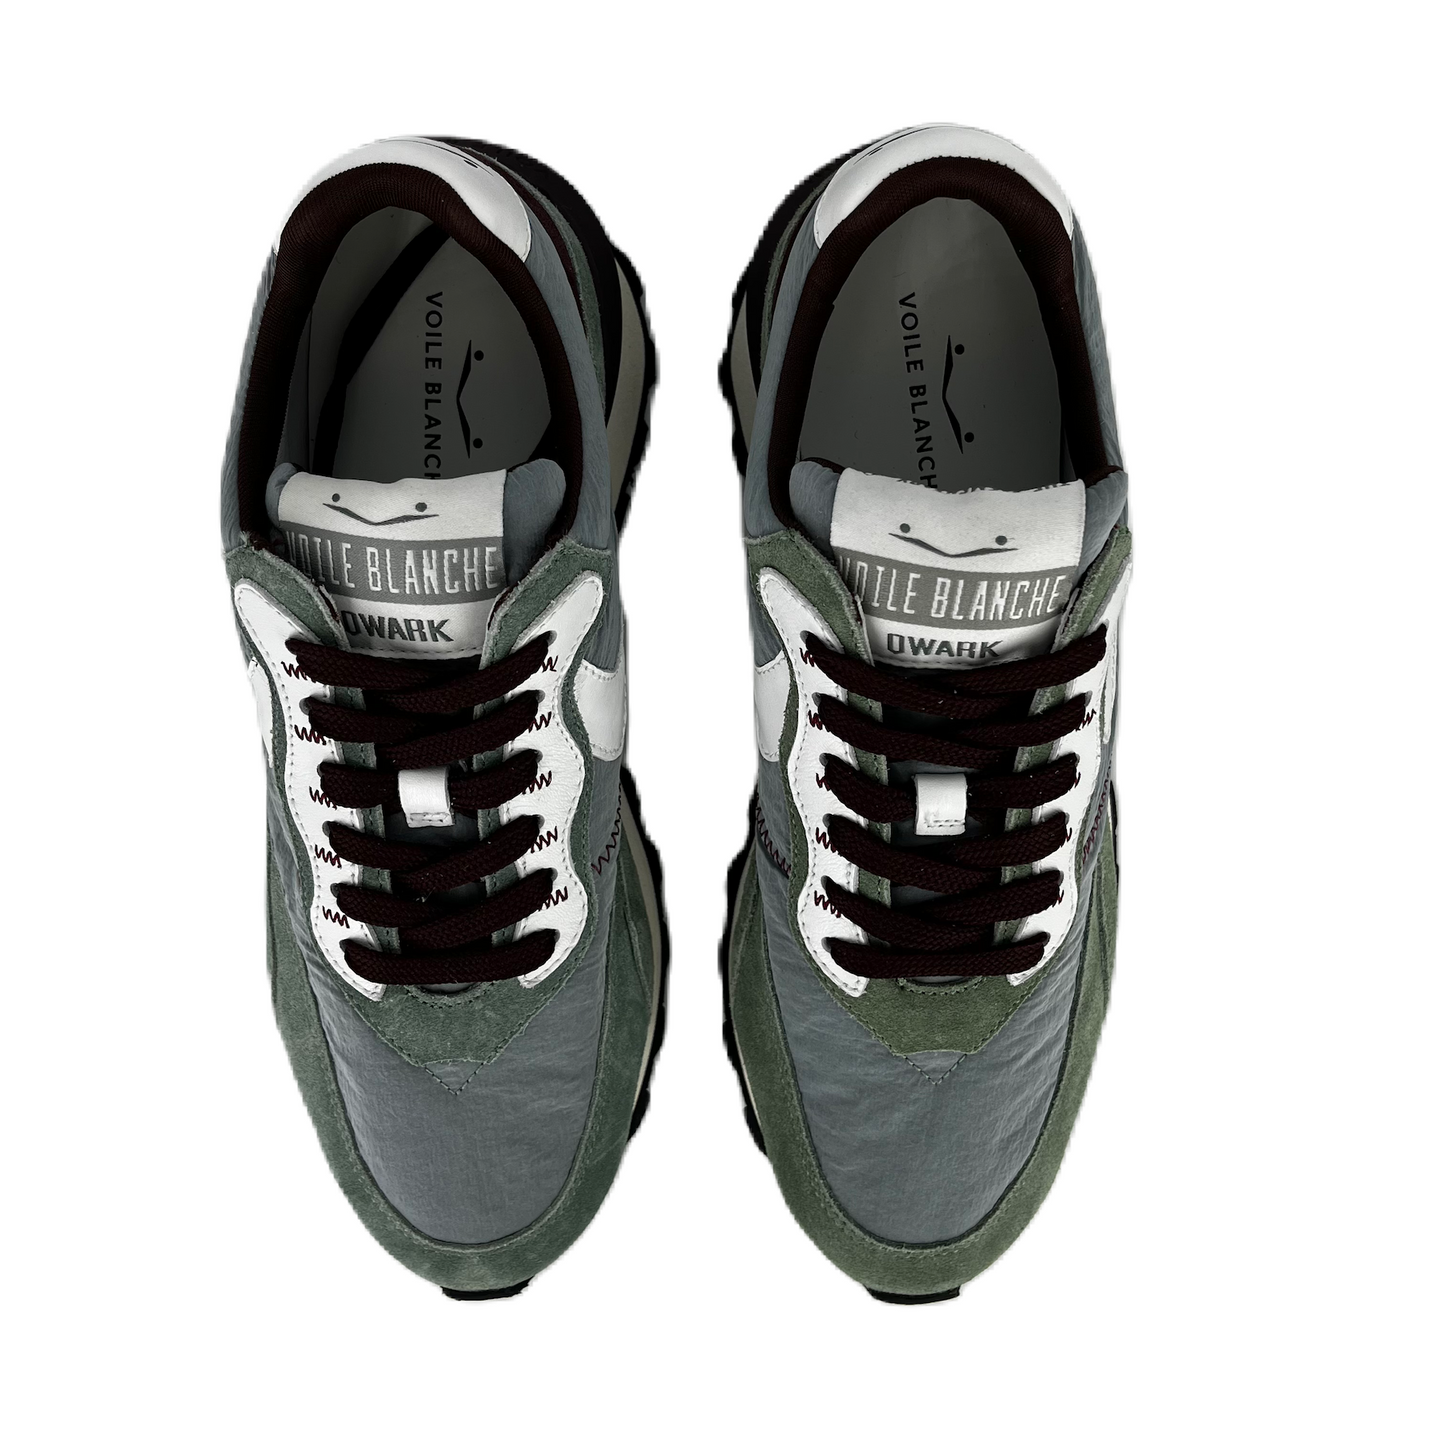 Sneakers De La Marca Voile Blanche Modelo Qwark Hype Sage Dark Gray